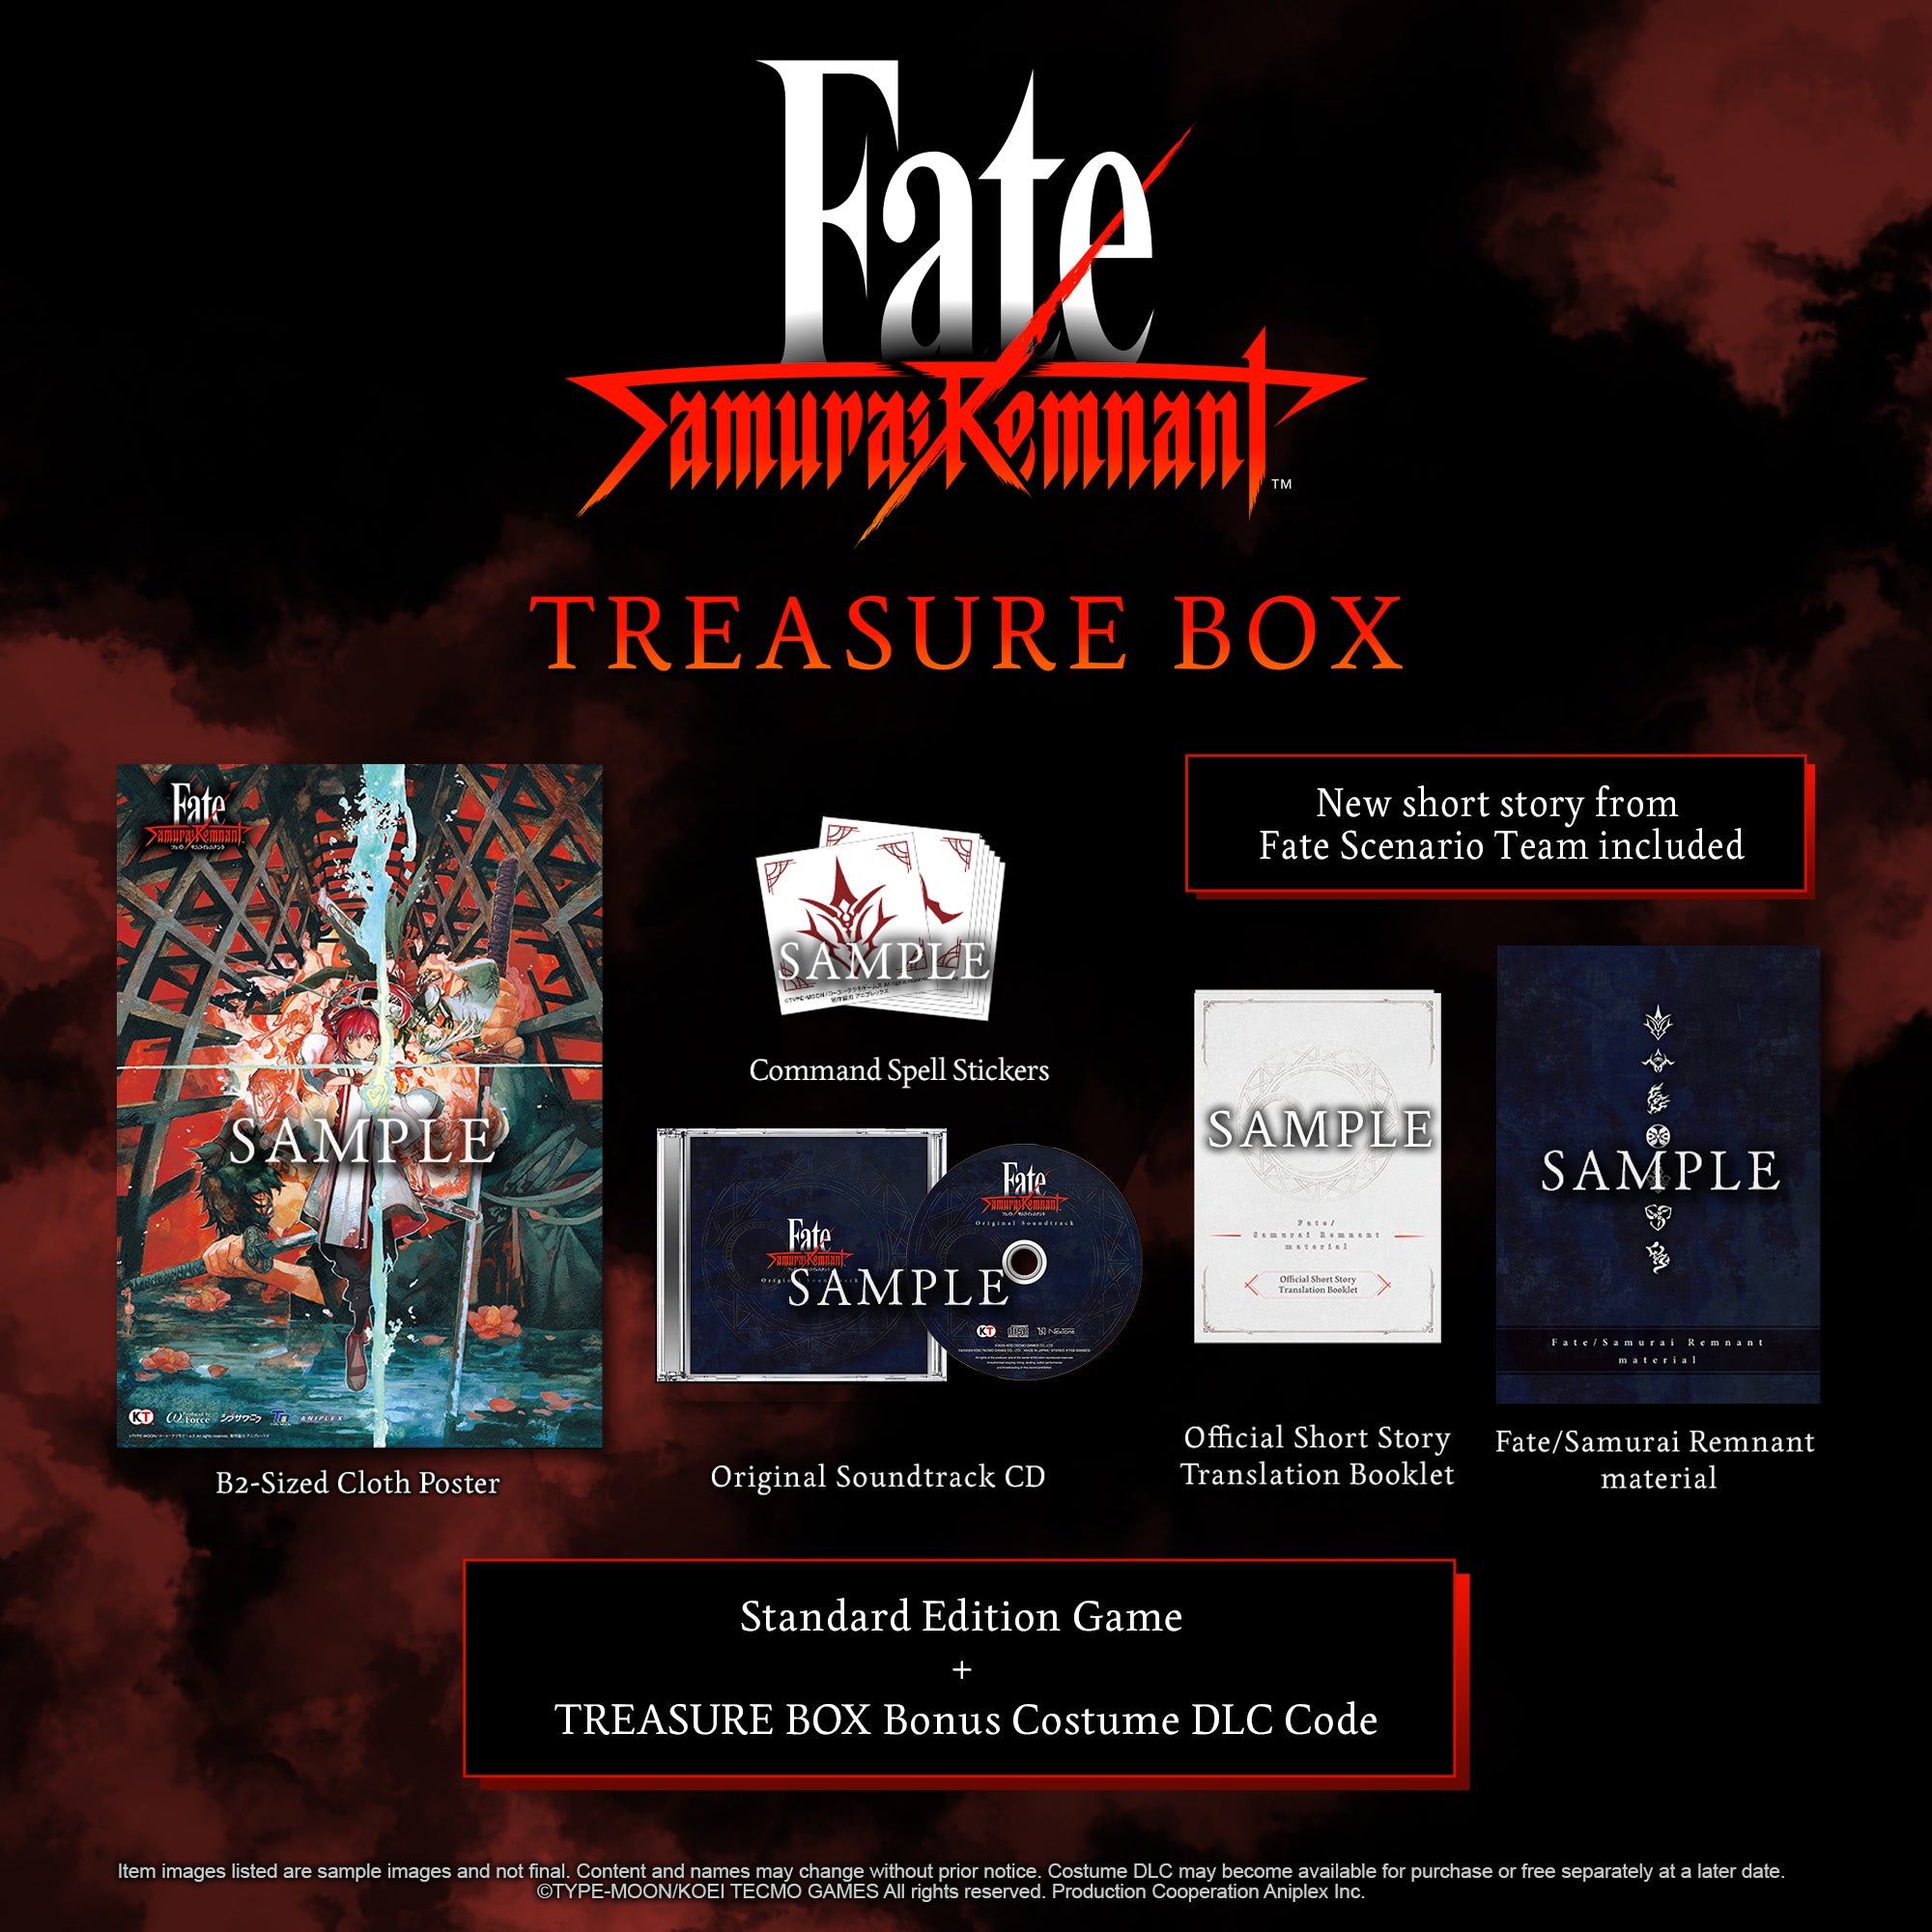 Fate/Samurai Remnant - TREASURE BOX - Nintendo Switch™ – KOEI